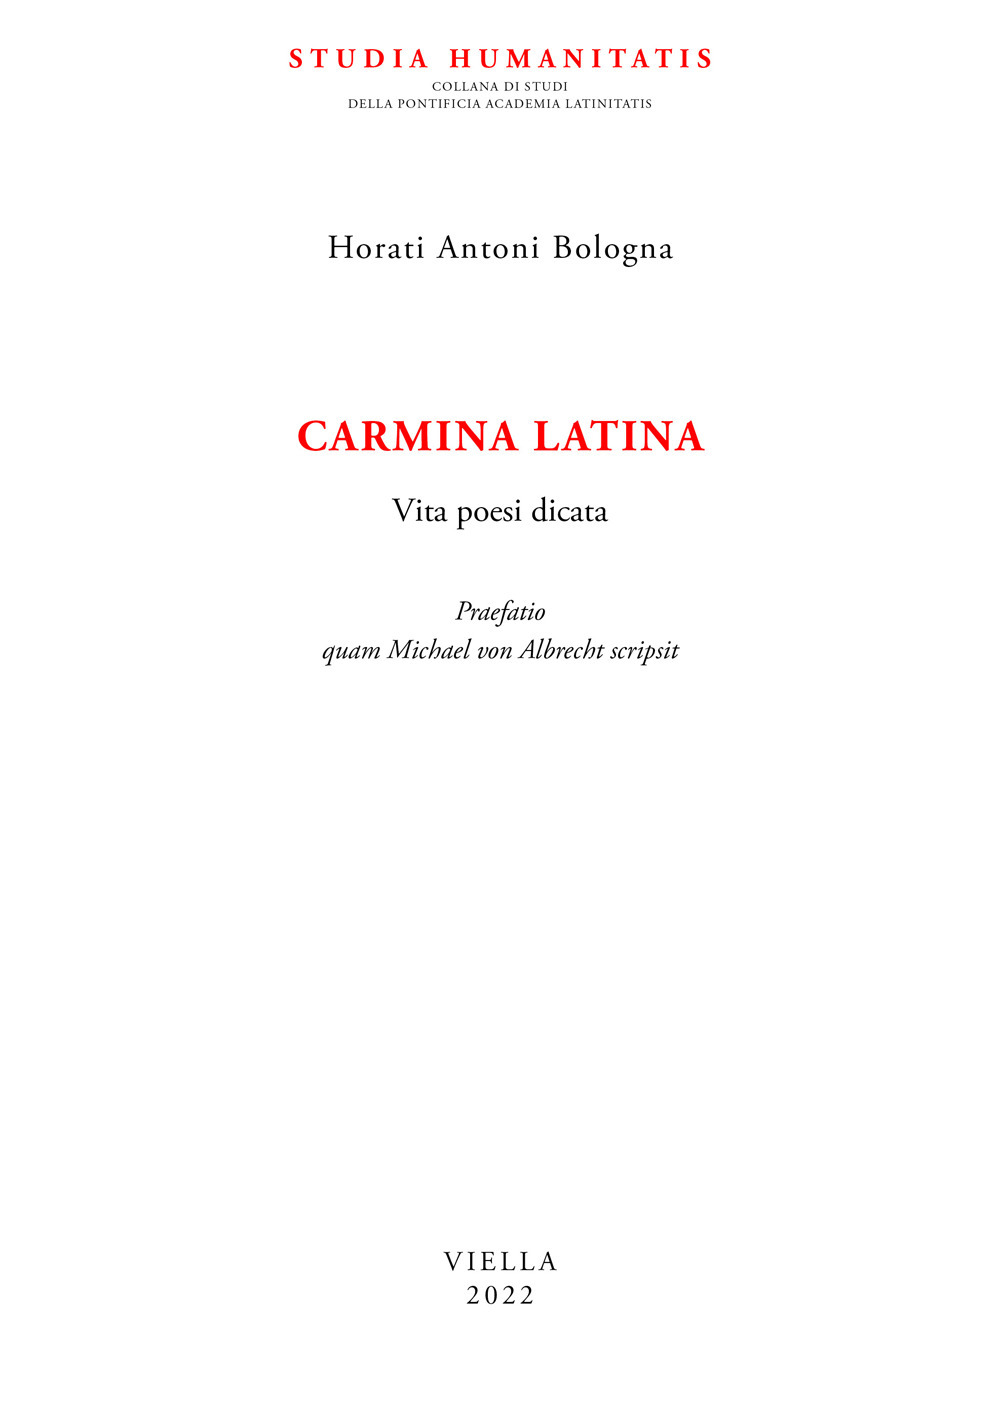 Carmina latina. Vita poesi dicata